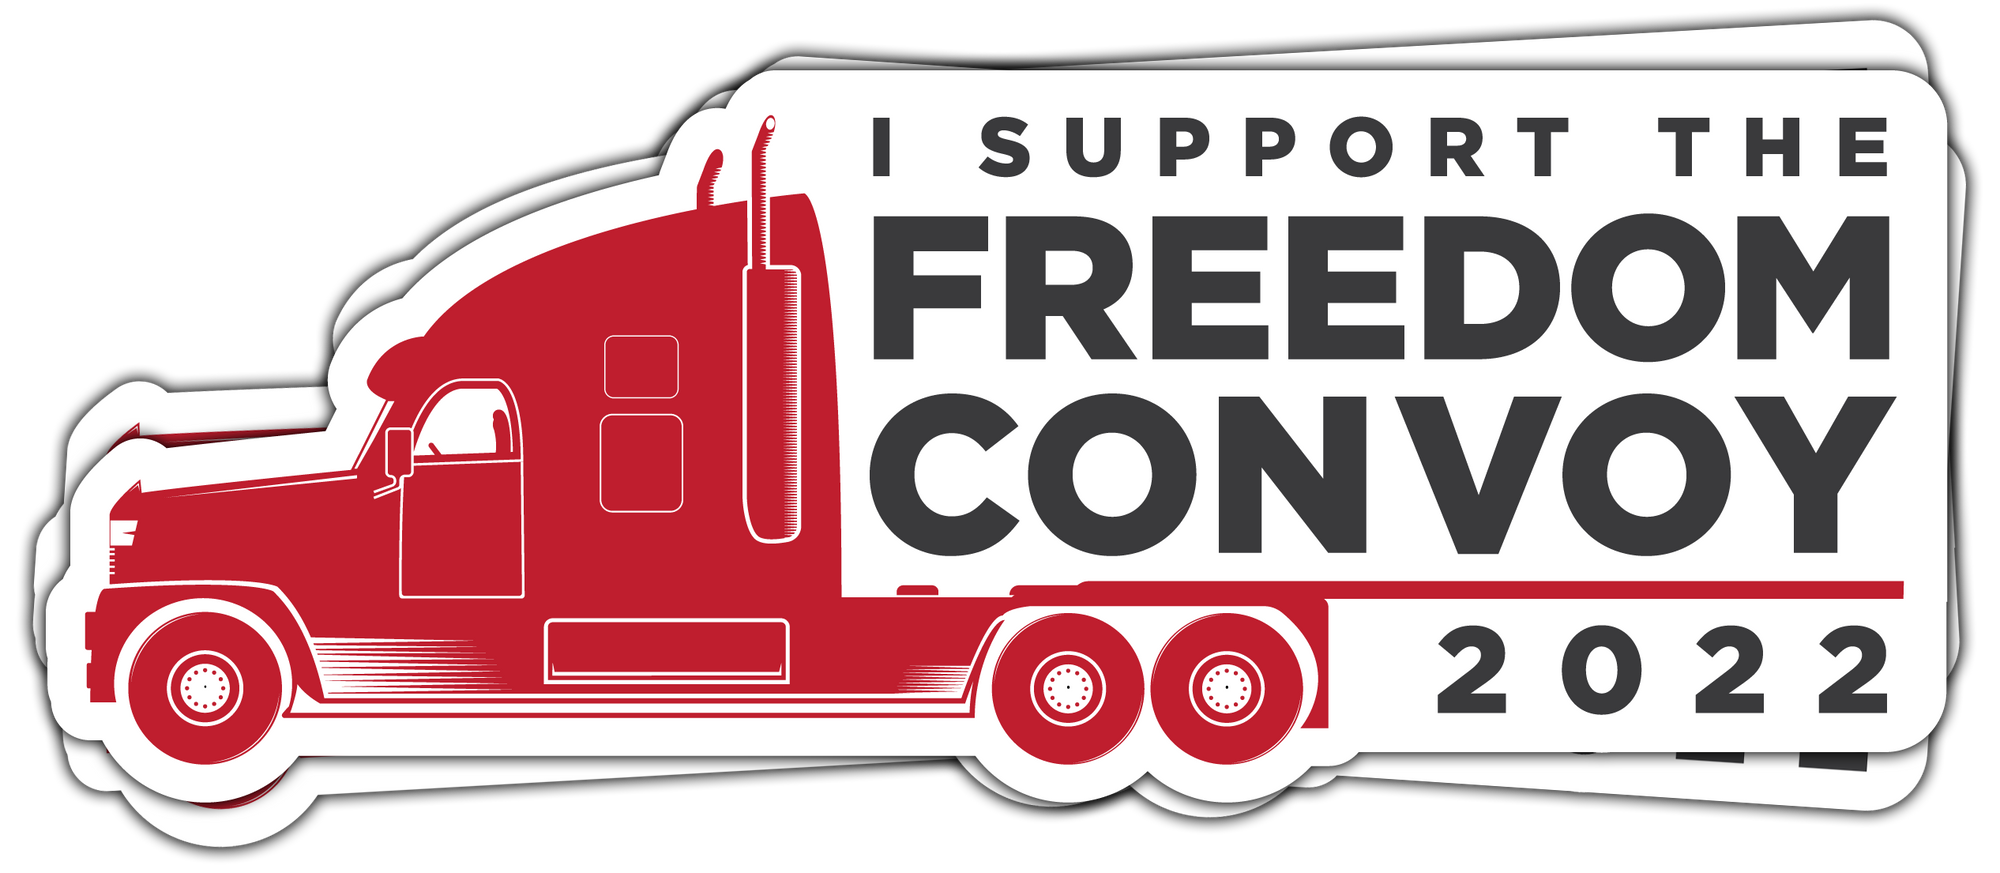 "Freedom Convoy" - Decal